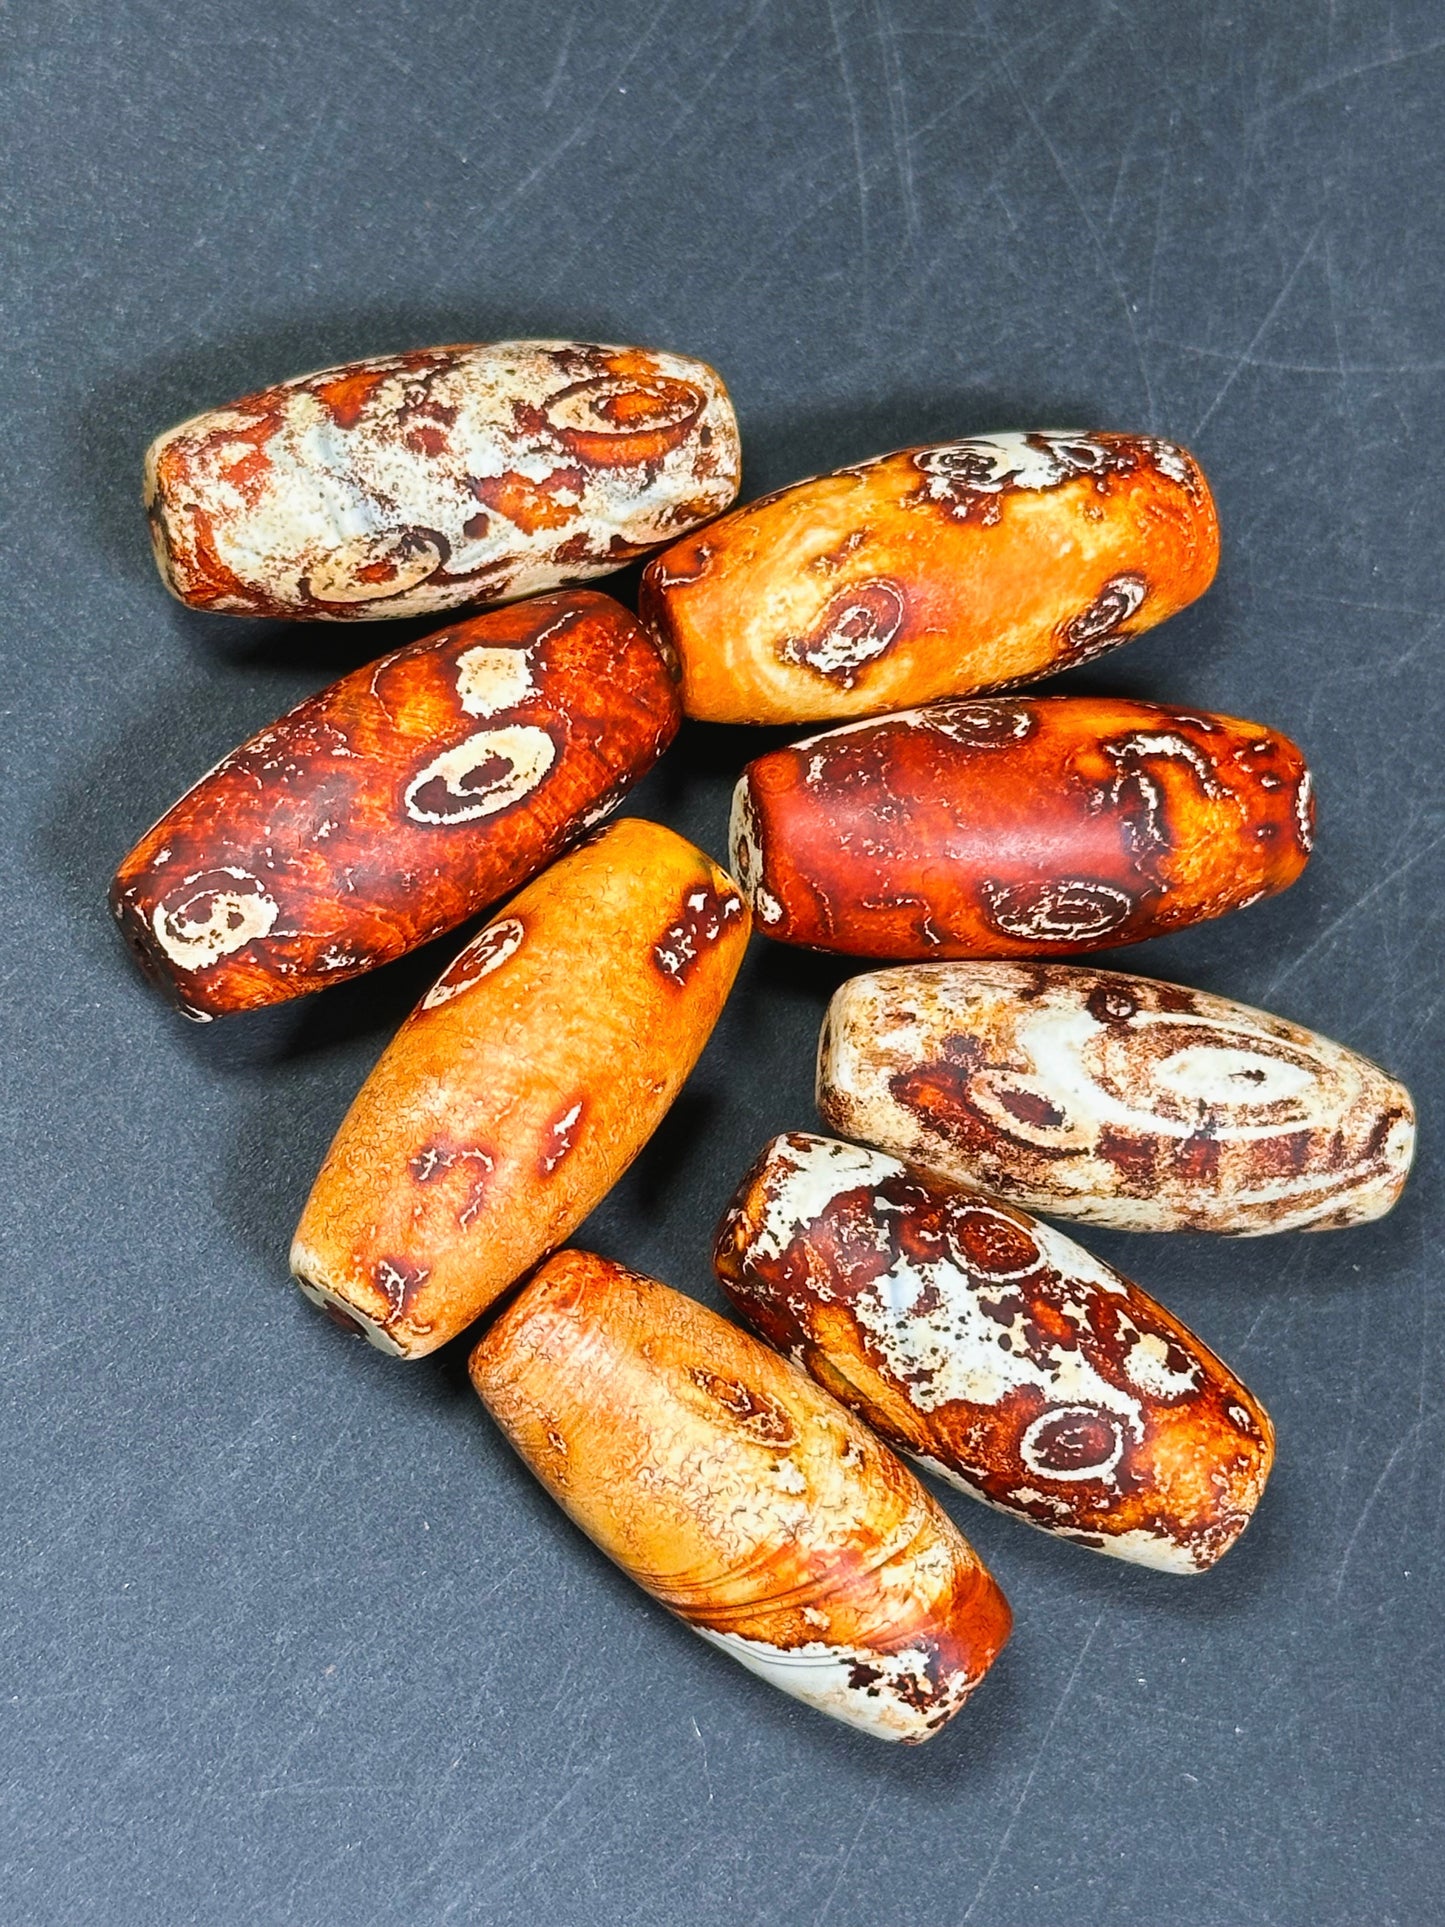 AAA Hand Painted Tibetan Gemstone Bead 29x13mm Barrel Shape Bead, Beautiful Orange Beige Color Unique Design Tibetan Agate LOOSE BEADS